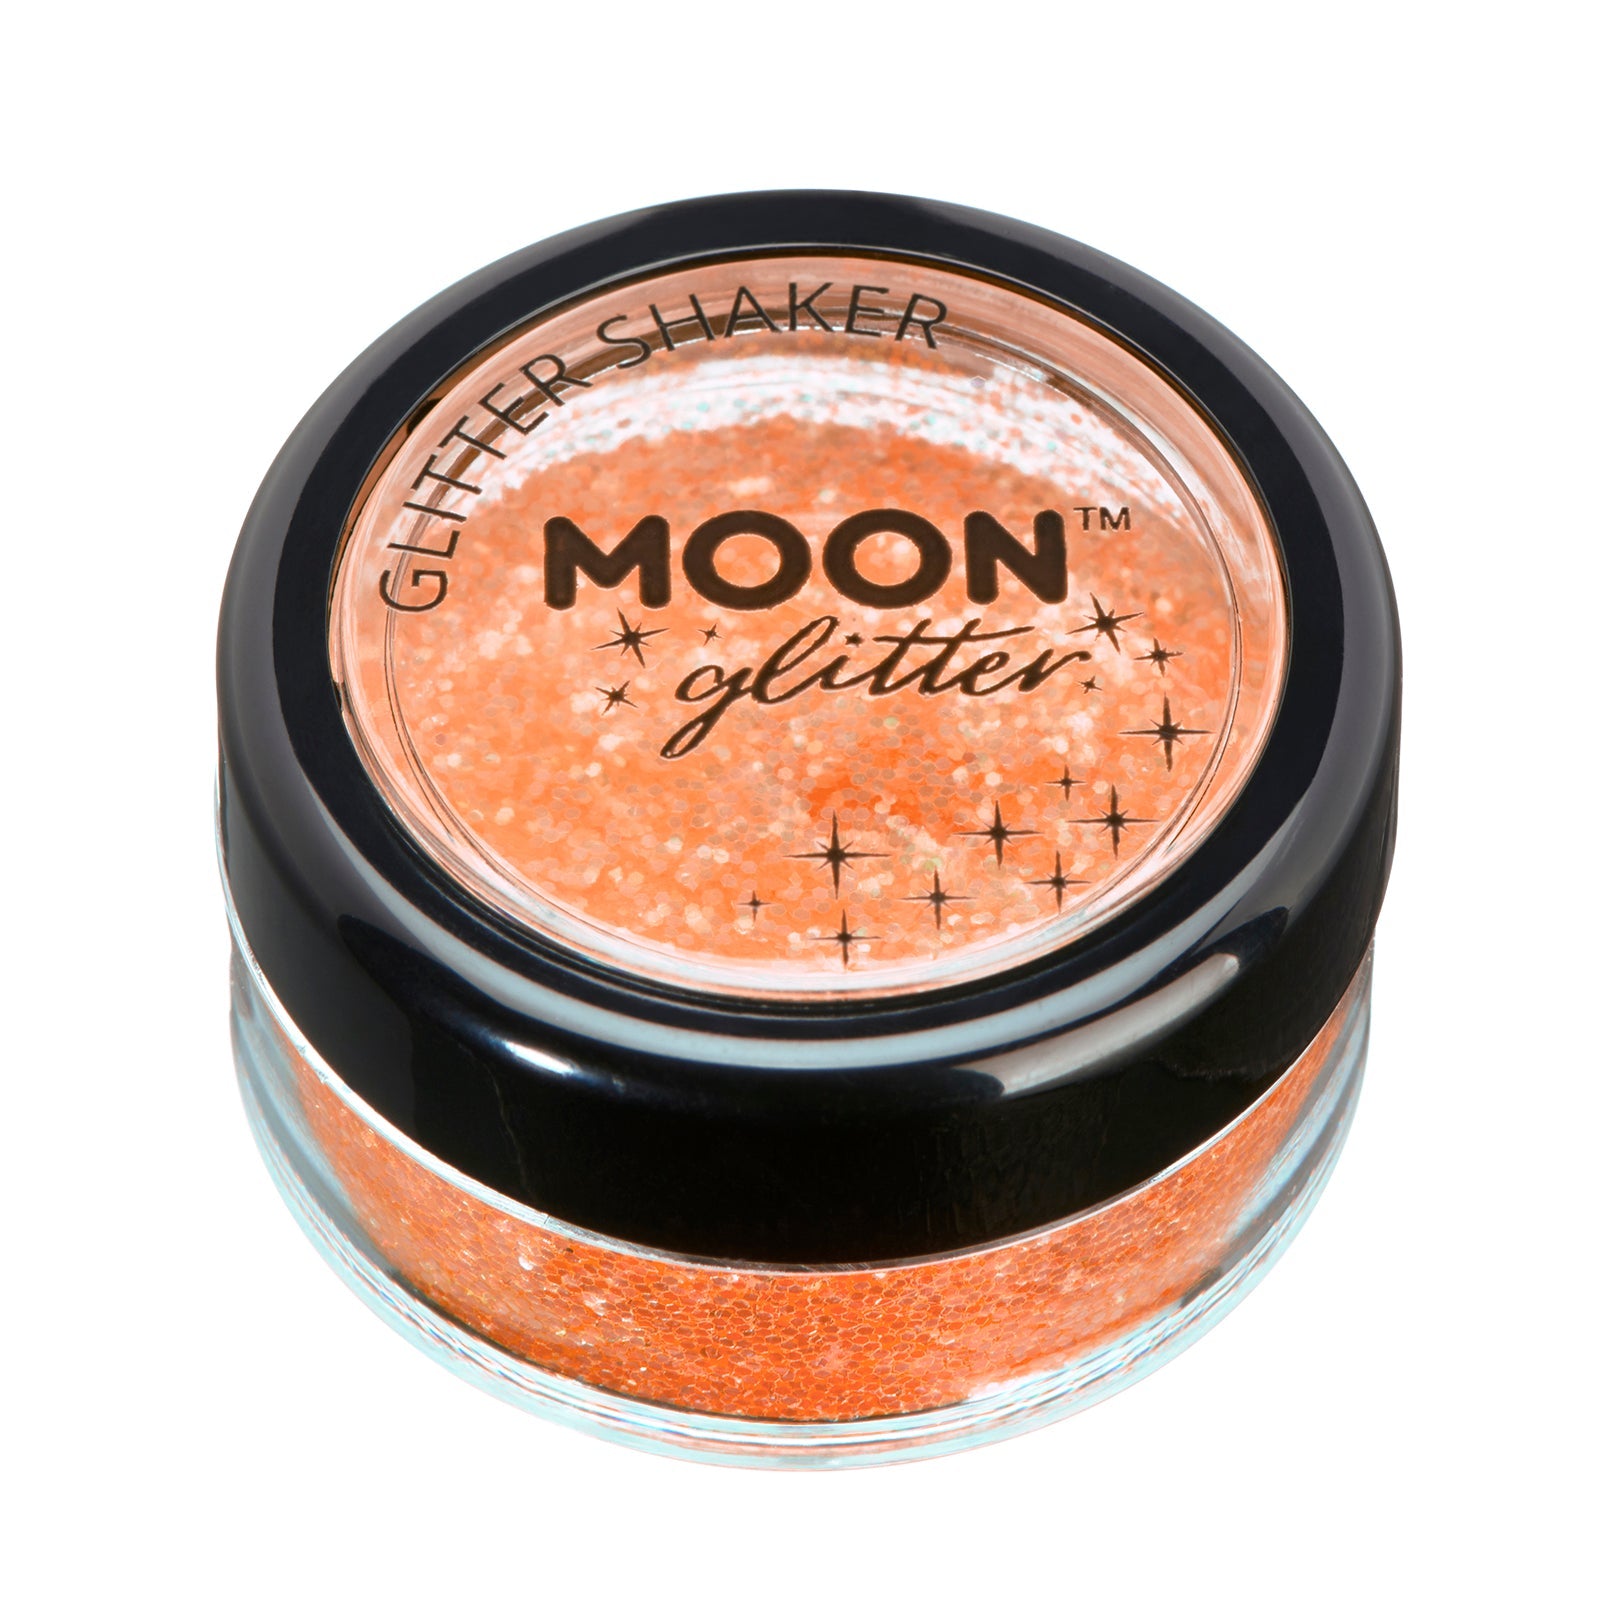 Orange - Iridescent Fine Face & Body Glitter Shaker, 5g. Cosmetically certified, FDA & Health Canada compliant, cruelty free and vegan.